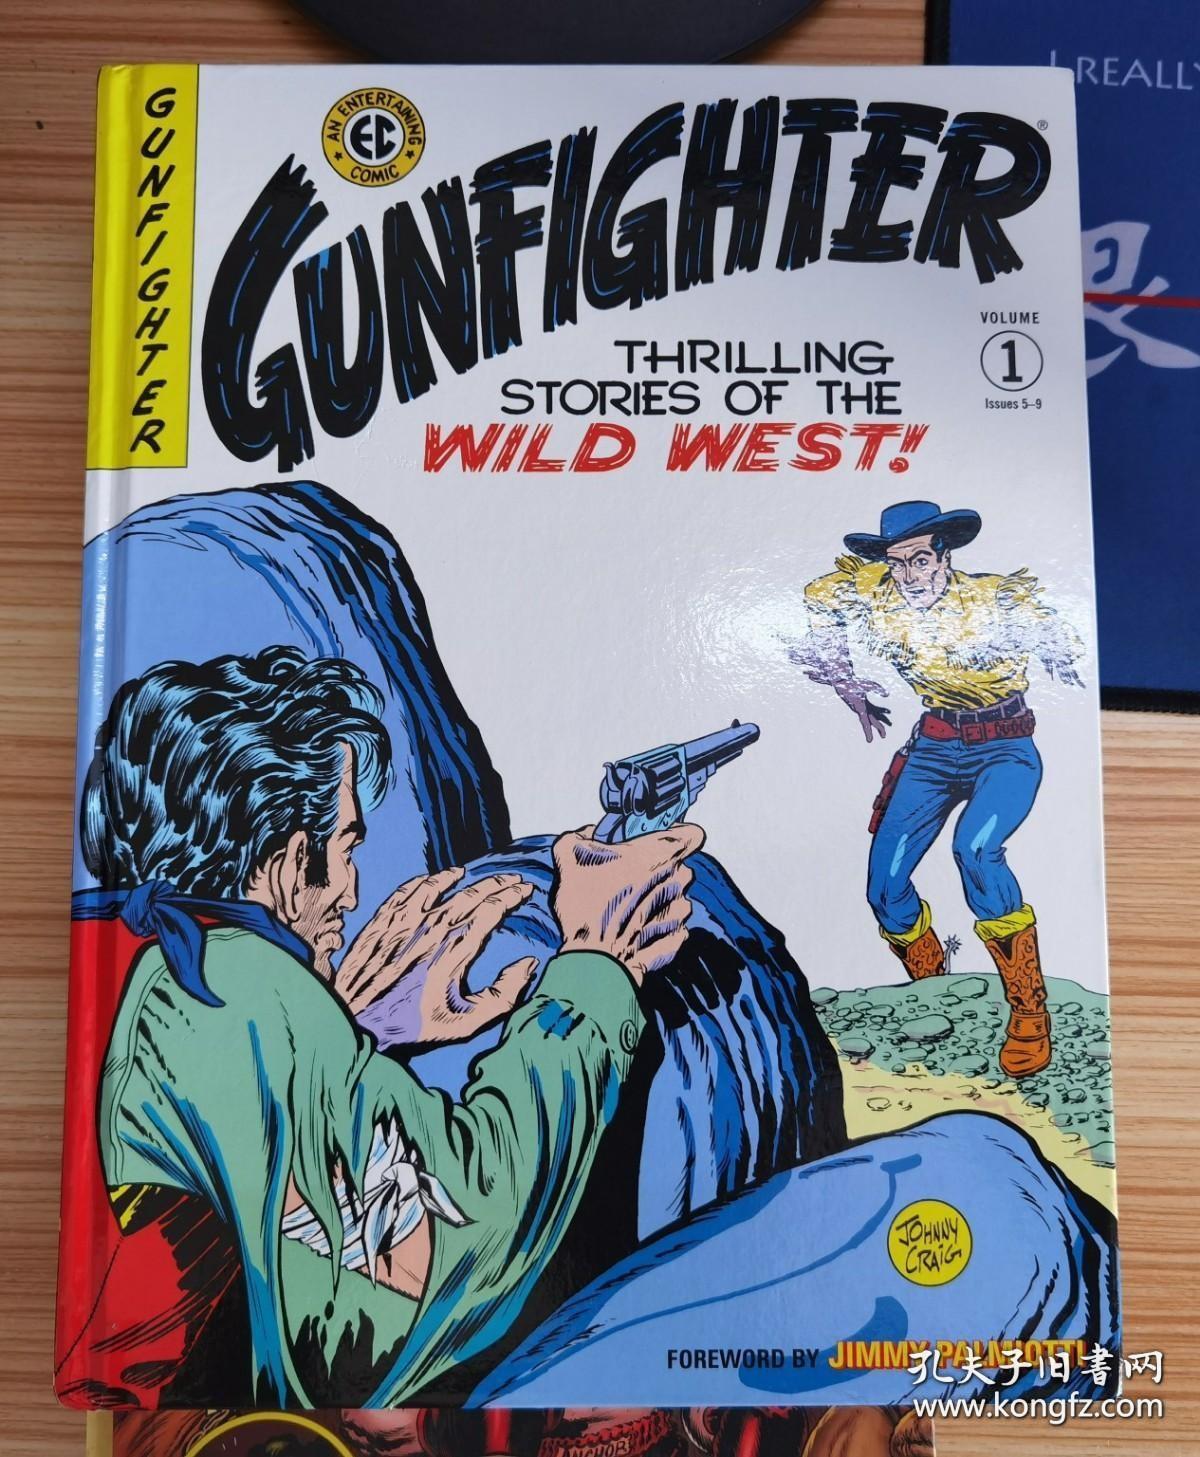 The EC Archives: Gunfighter Volume 1 Graphic Novels